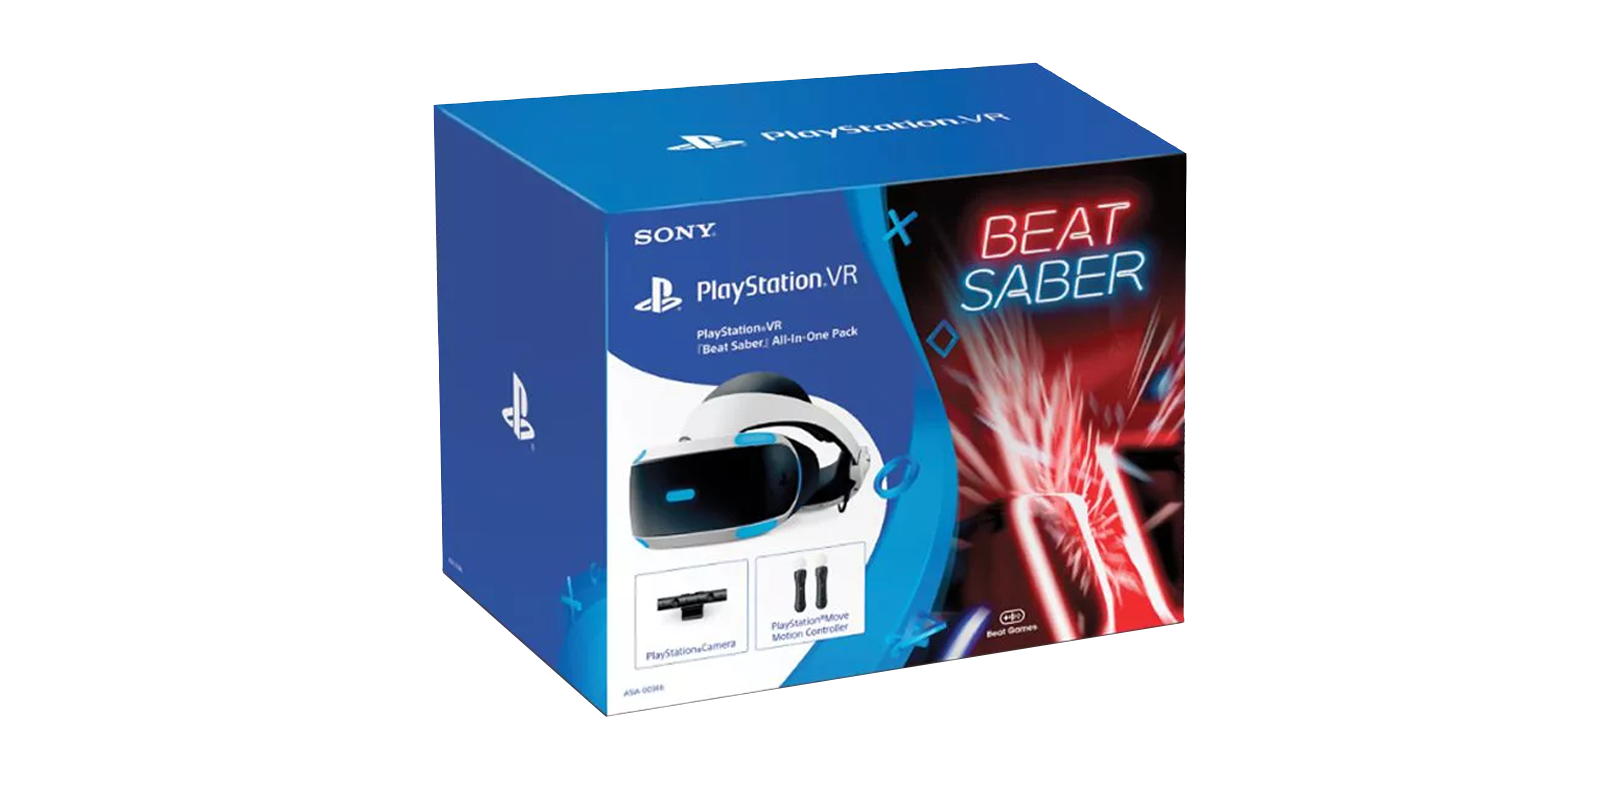 SIES เตรียมวางขาย PS VR Beat Saber All-in-One Pack ราคา 11,990 บาท